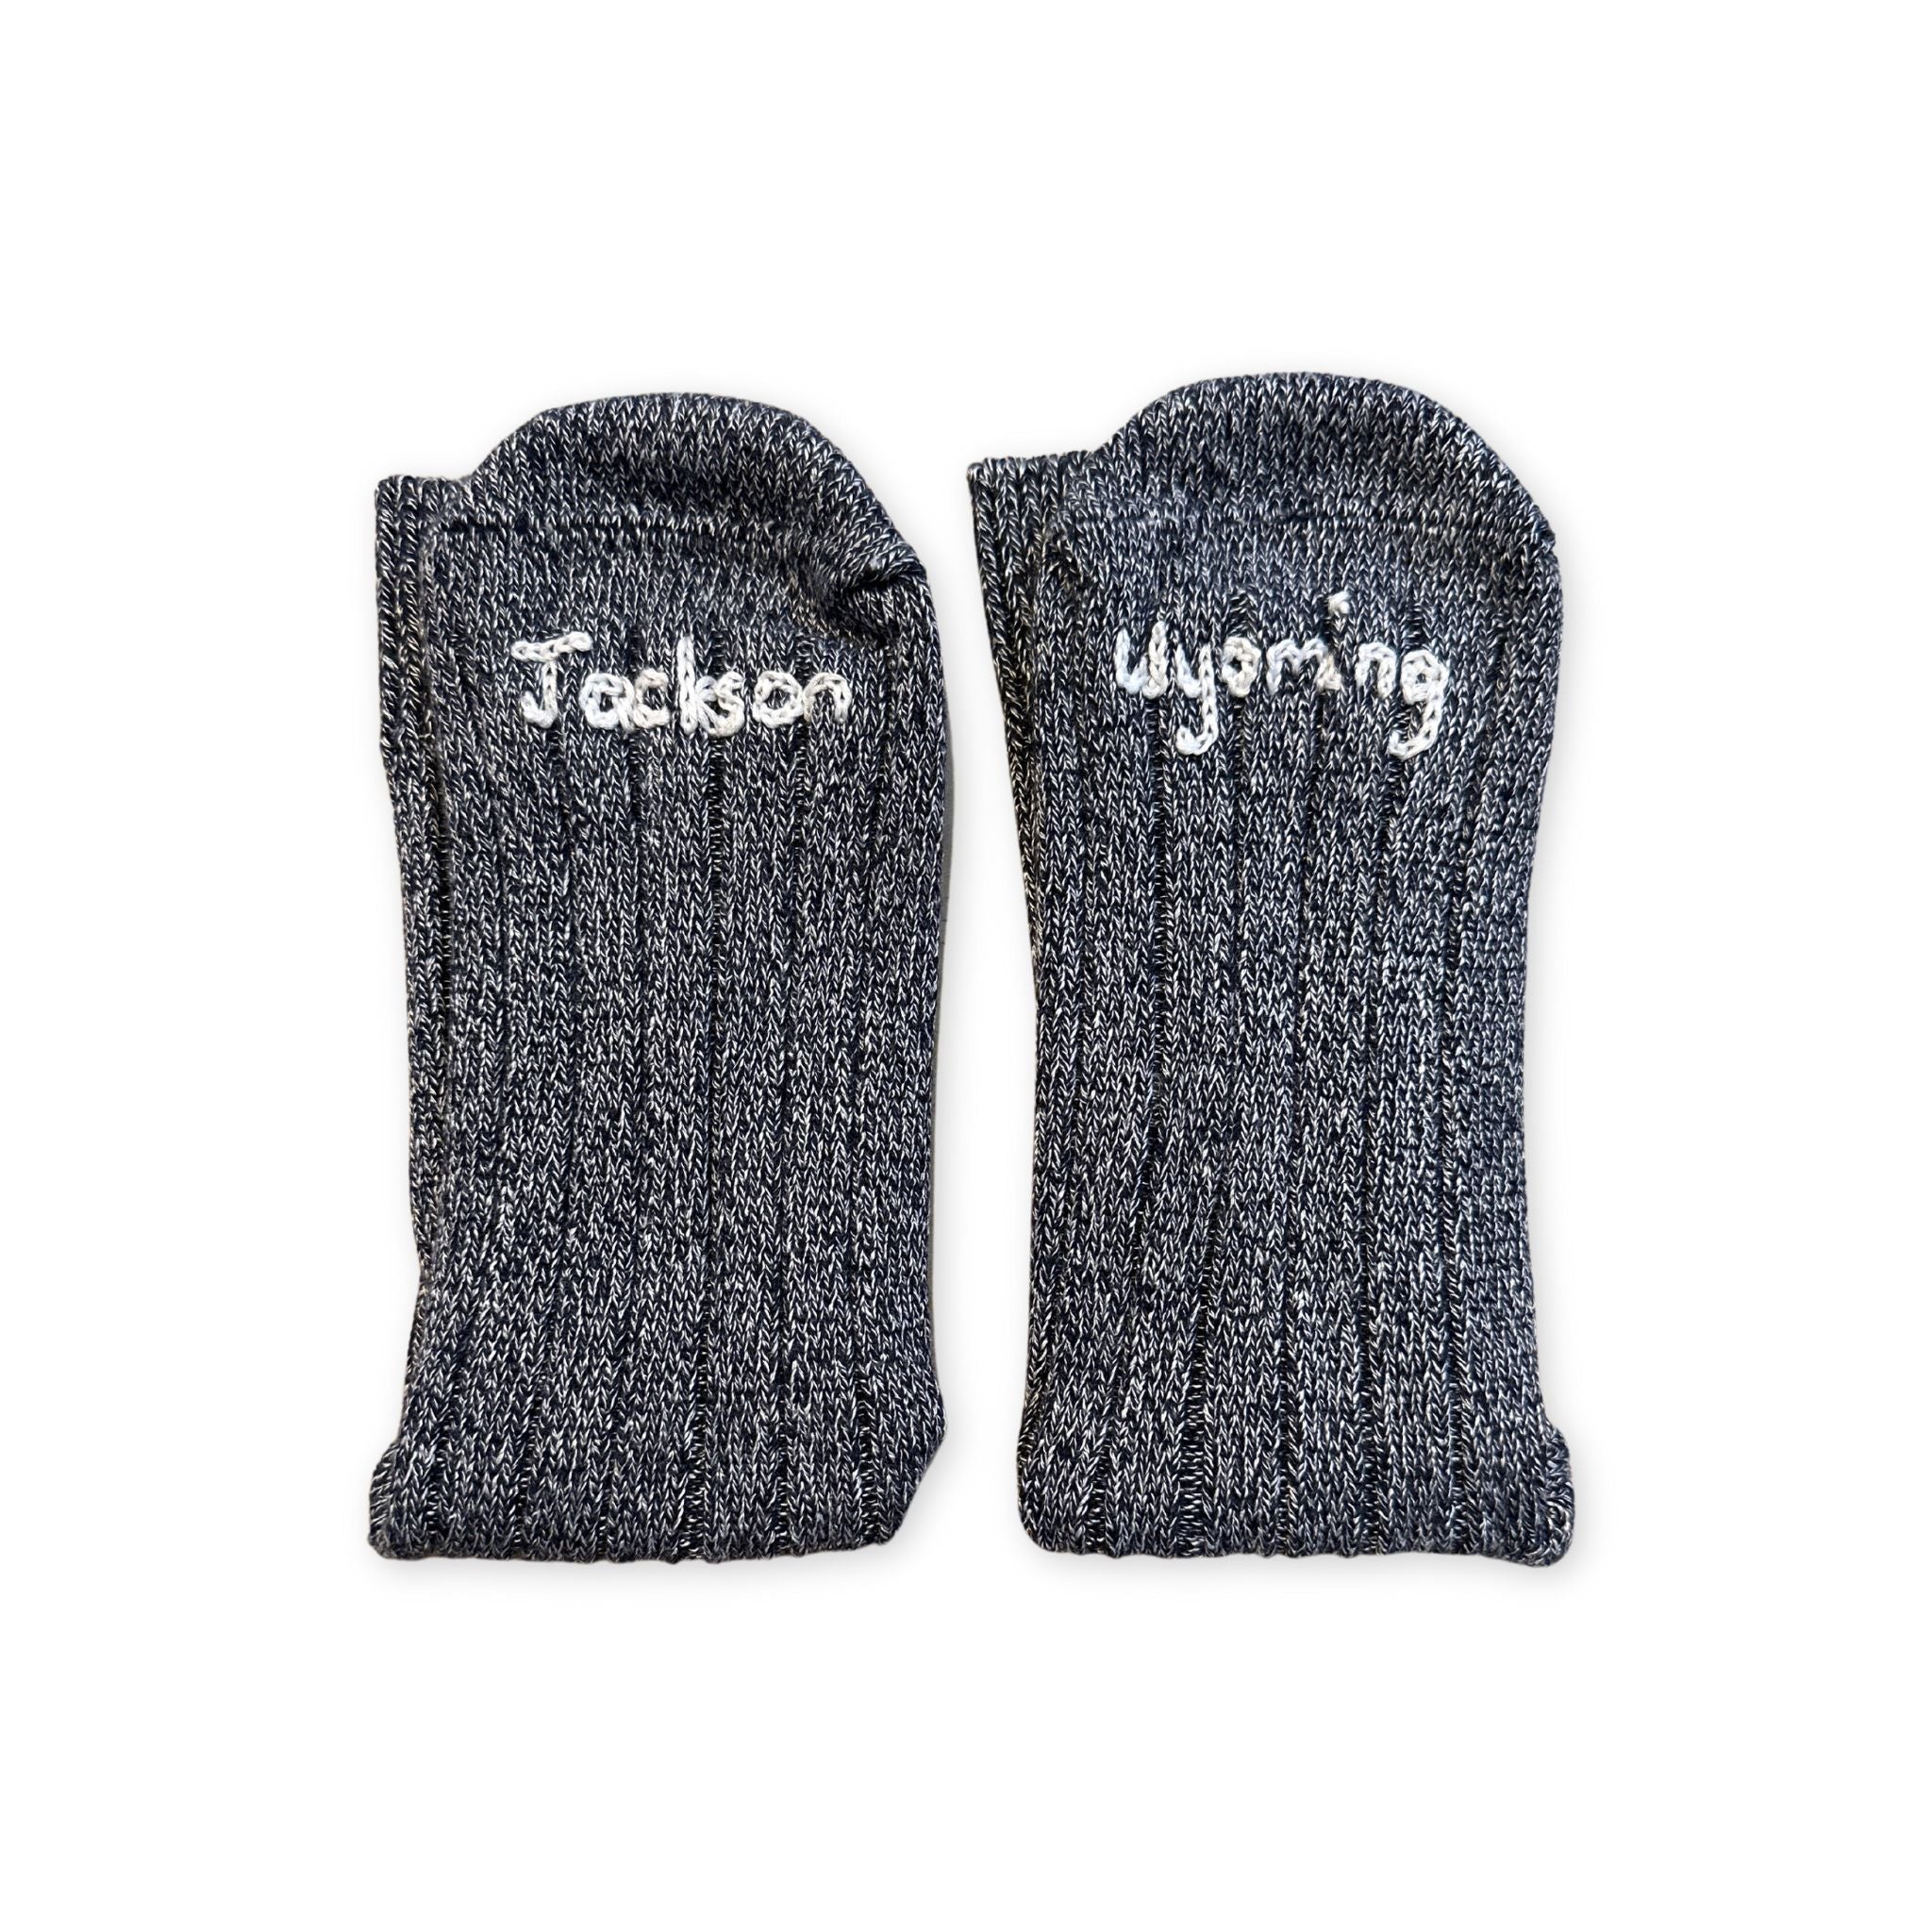 Jackson Wyoming Socks